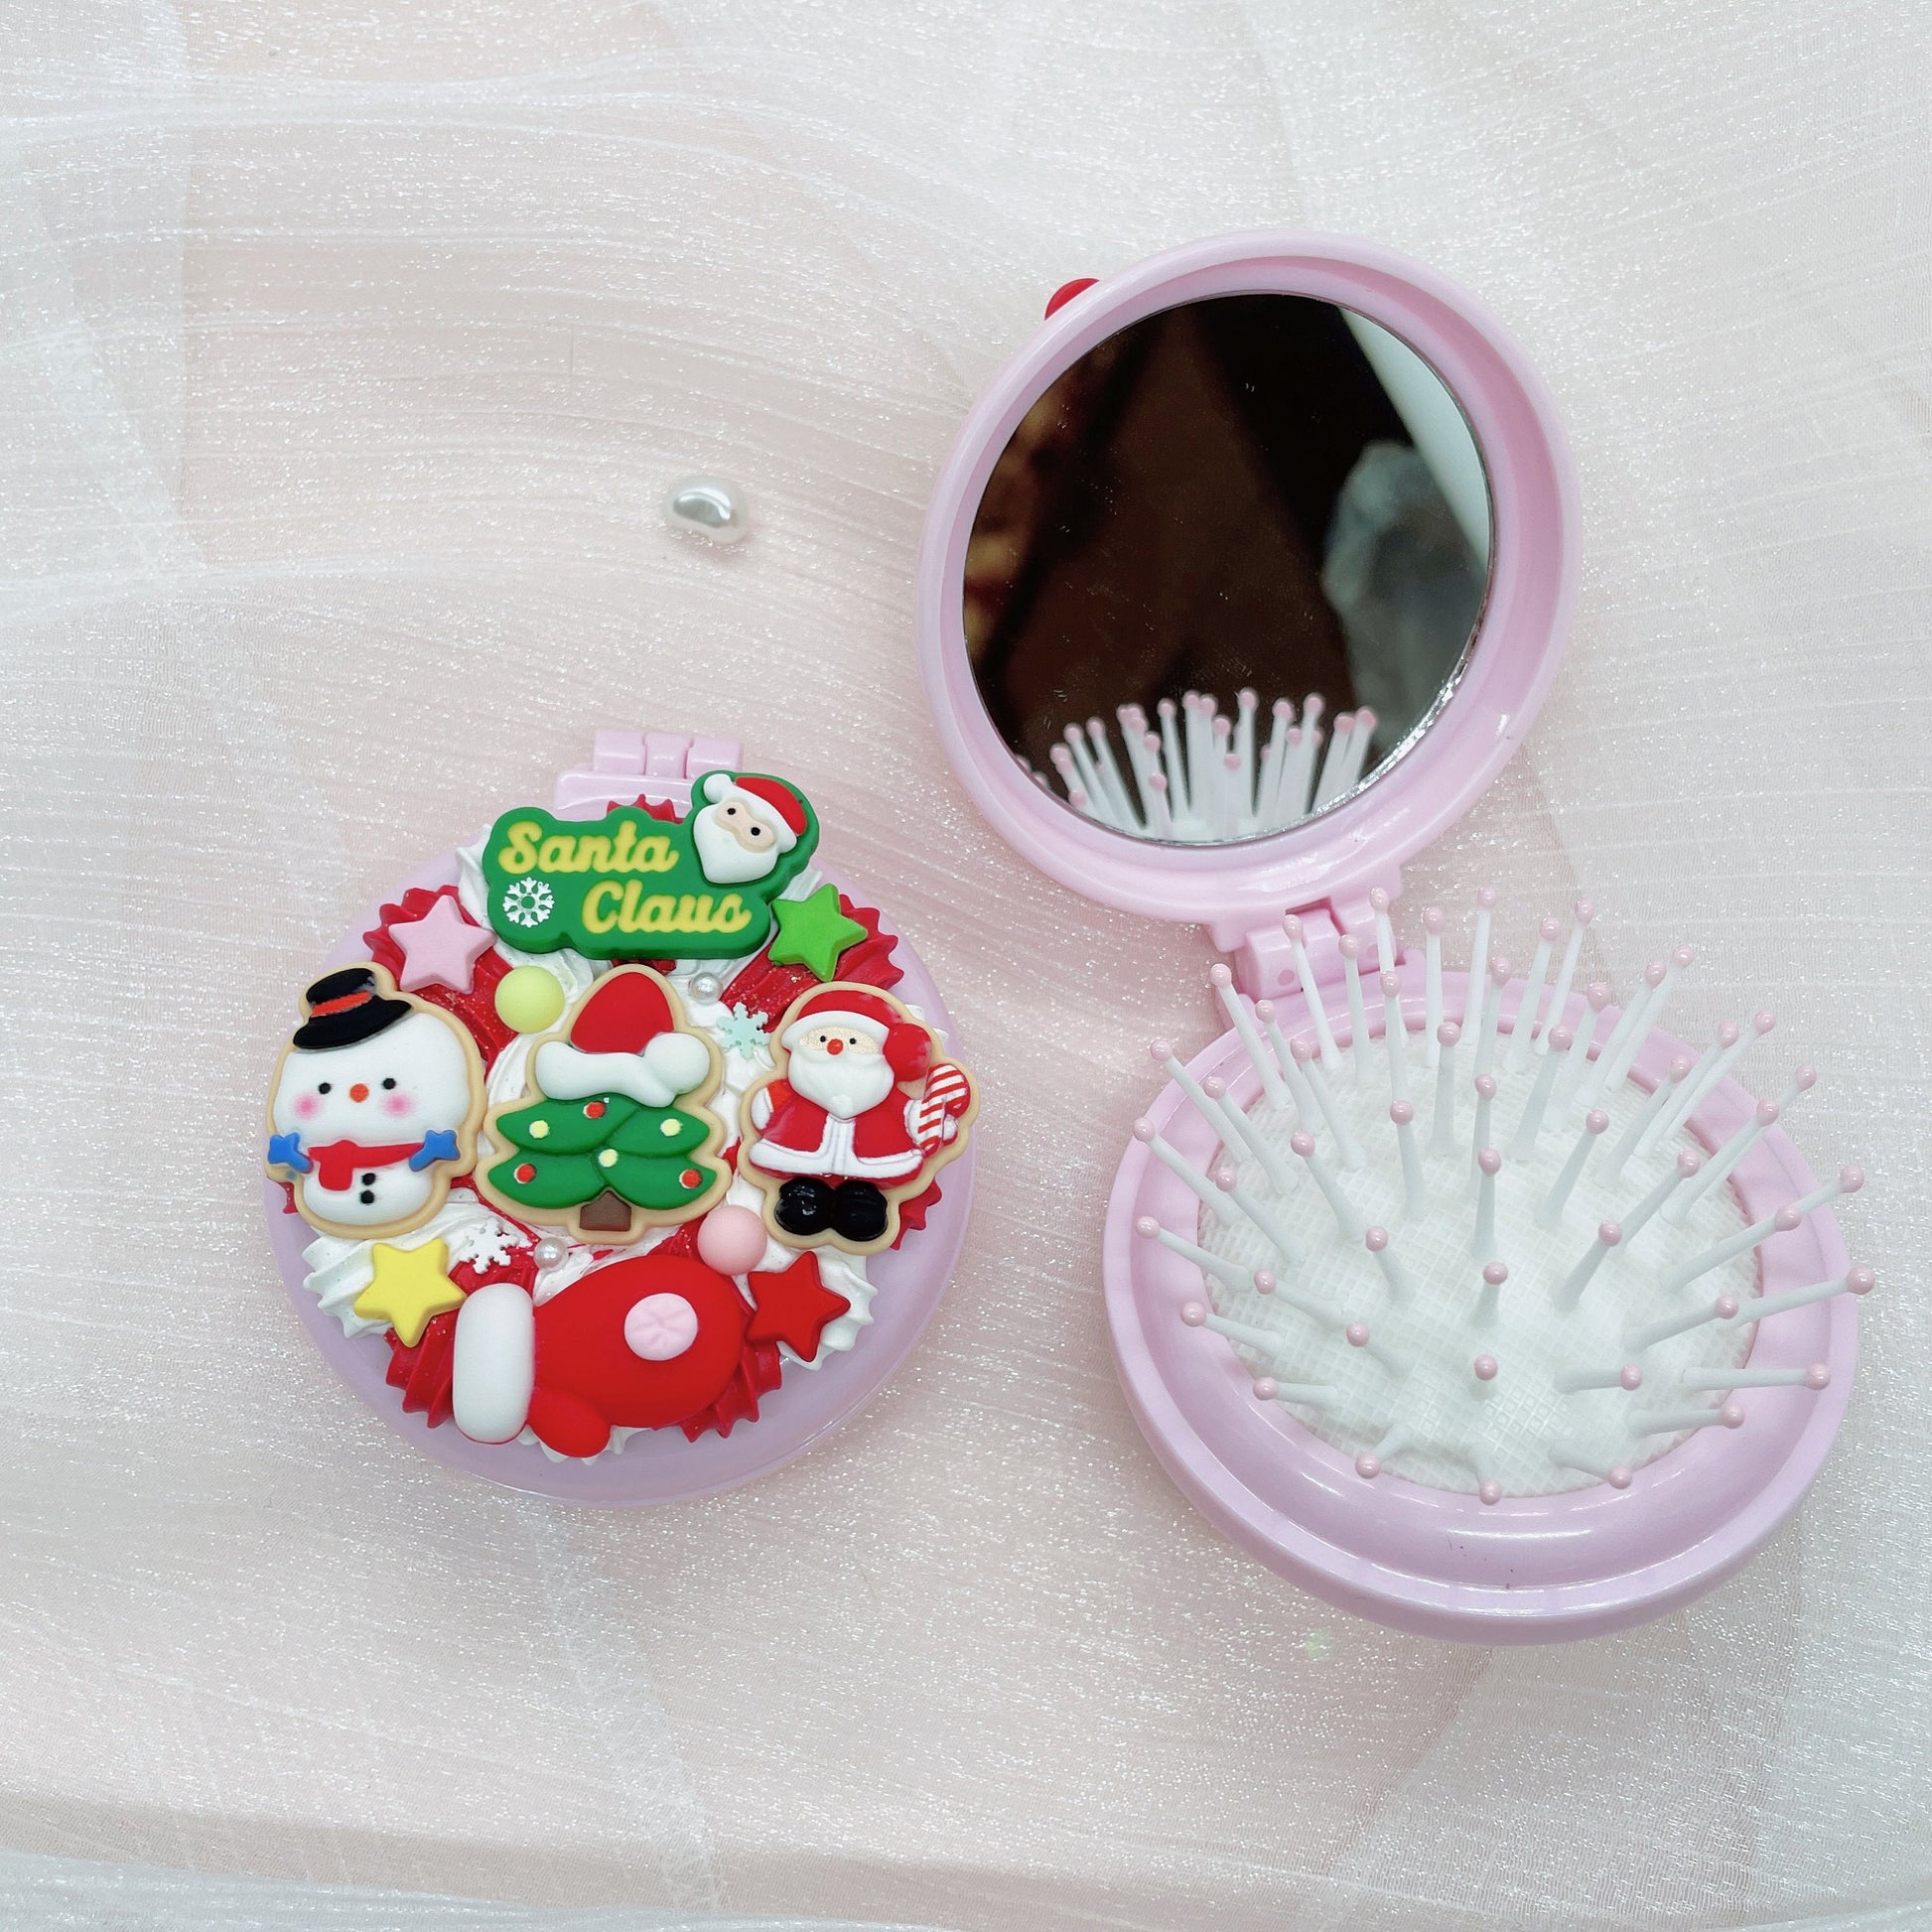 Christmas hair brush with mirror, Kawaii compact hairbrush, Pocket Mirror, Handmade Decoden Hair Brushes, Random 1, each one is unique